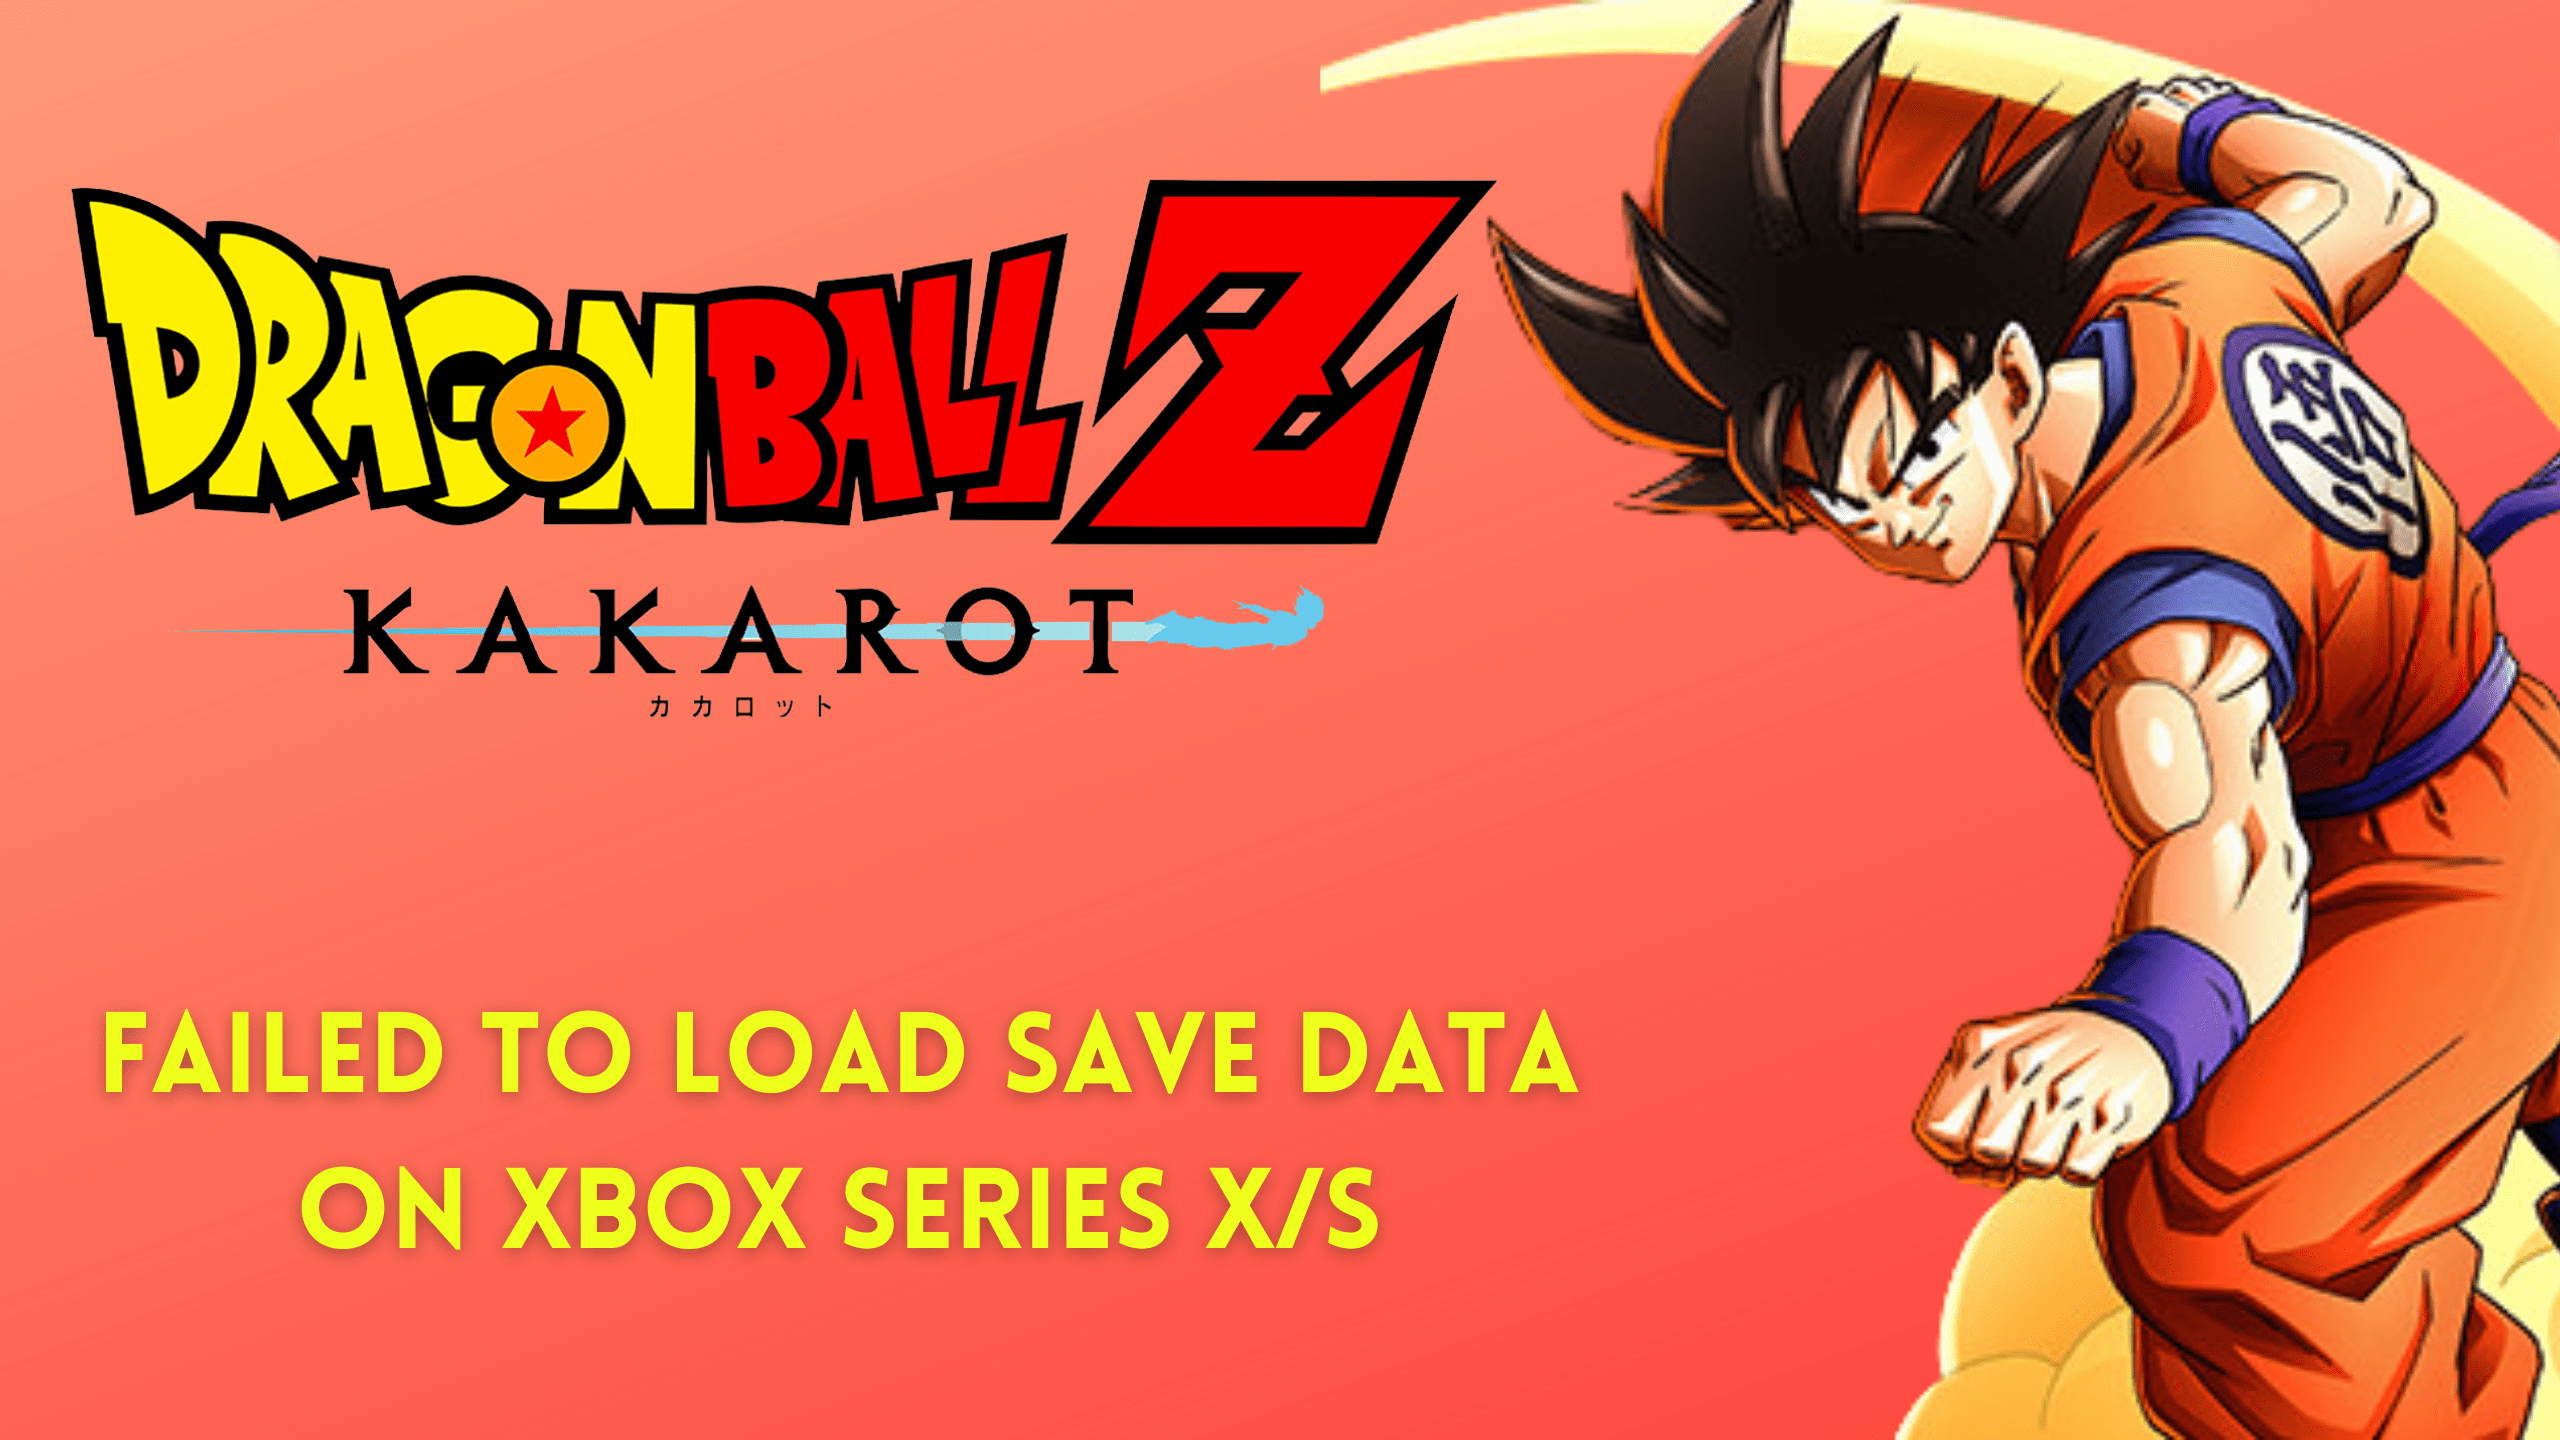 Dragon Ball Z Kakarot failed to load save data